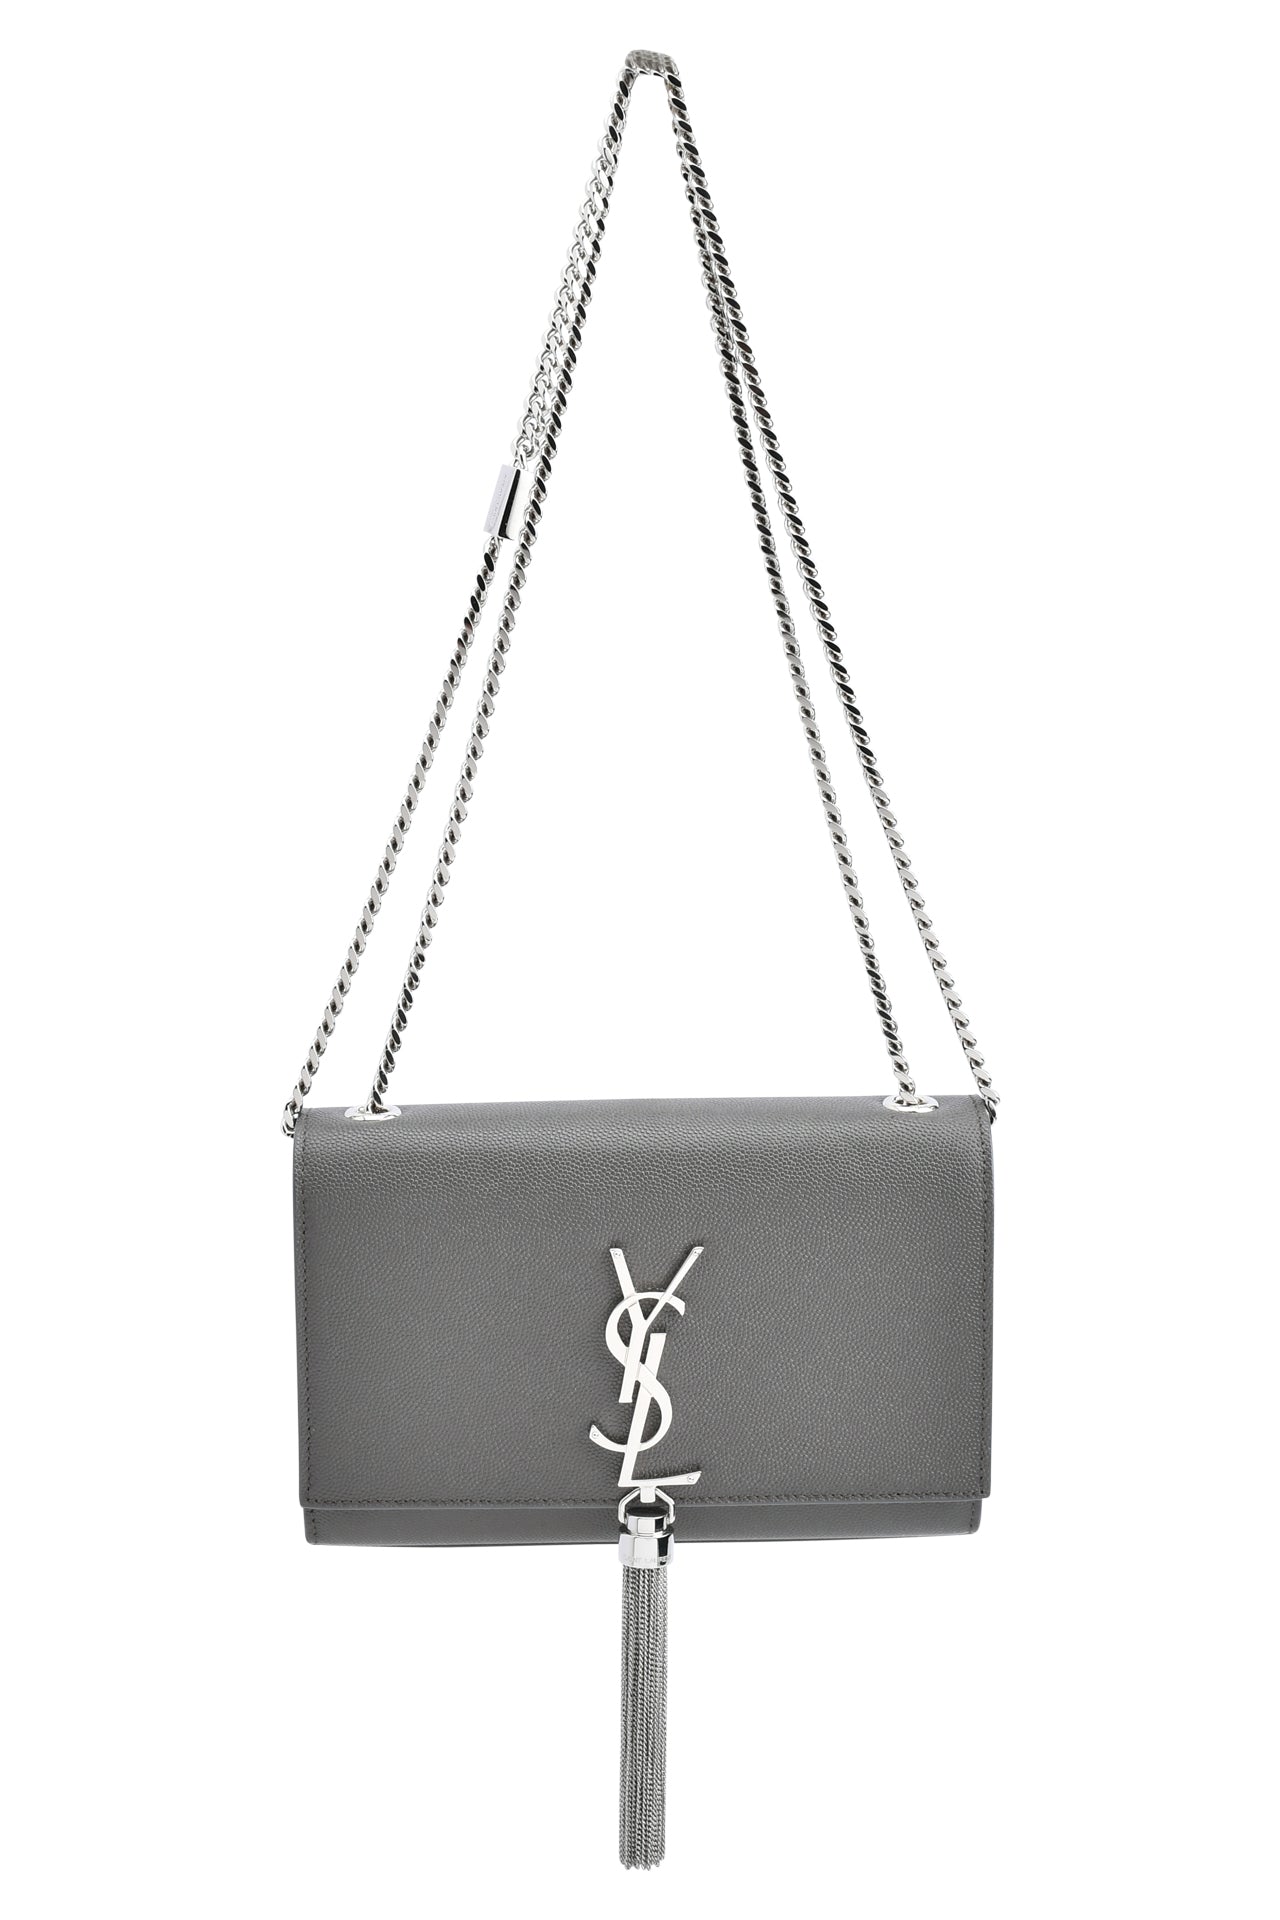 YSL Leather Kate Tassel Bag